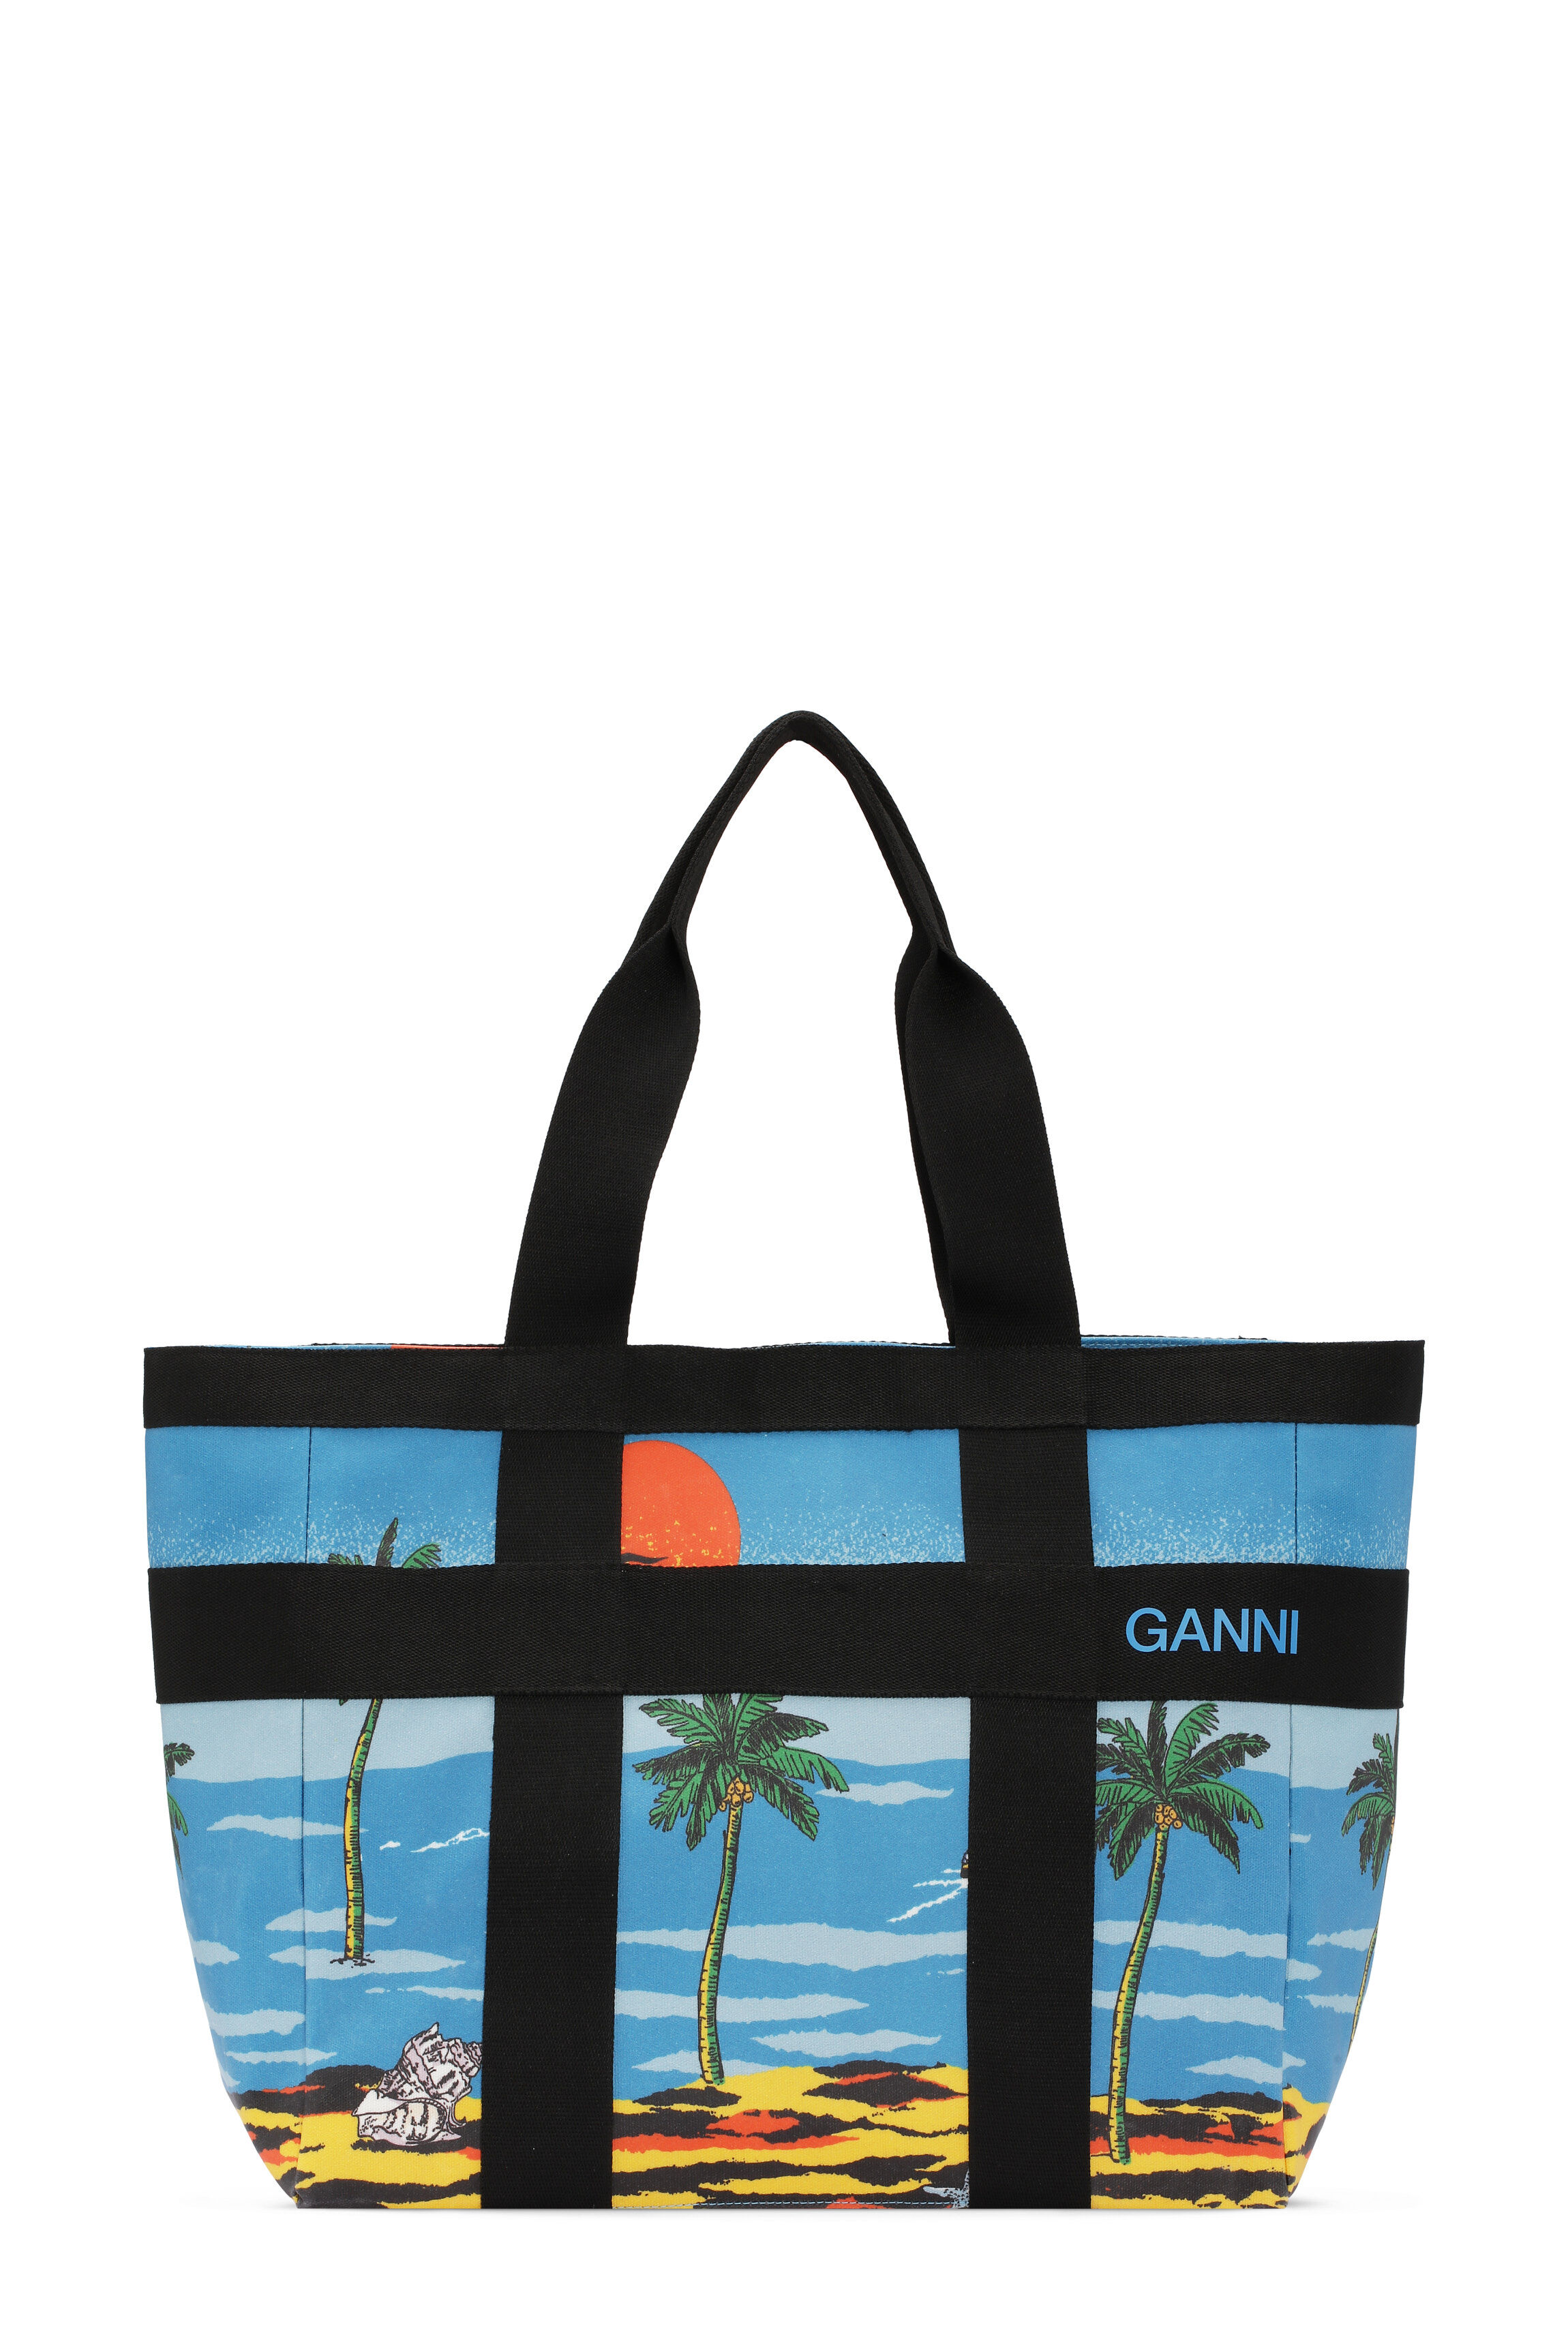 Bag Tote Palm Tree Beach Trees Purse Travel Large Handbag S Print Women 